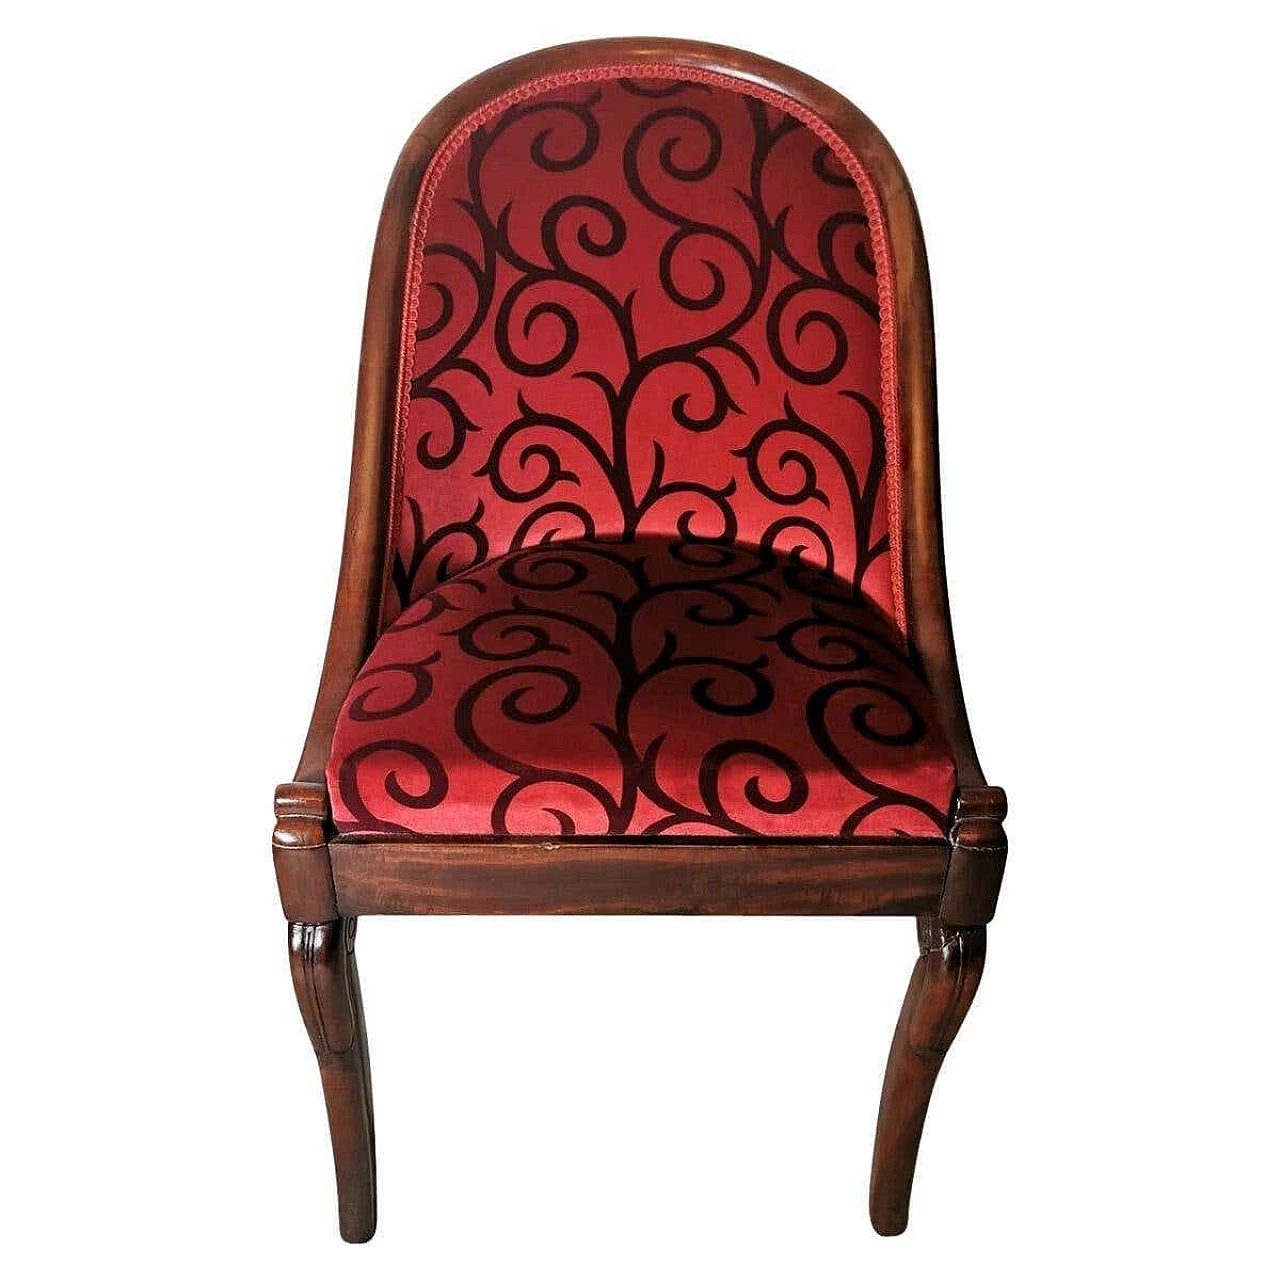 Late Empire cockpit chair in mahogany and Dedar velvet, 19th century 1252131